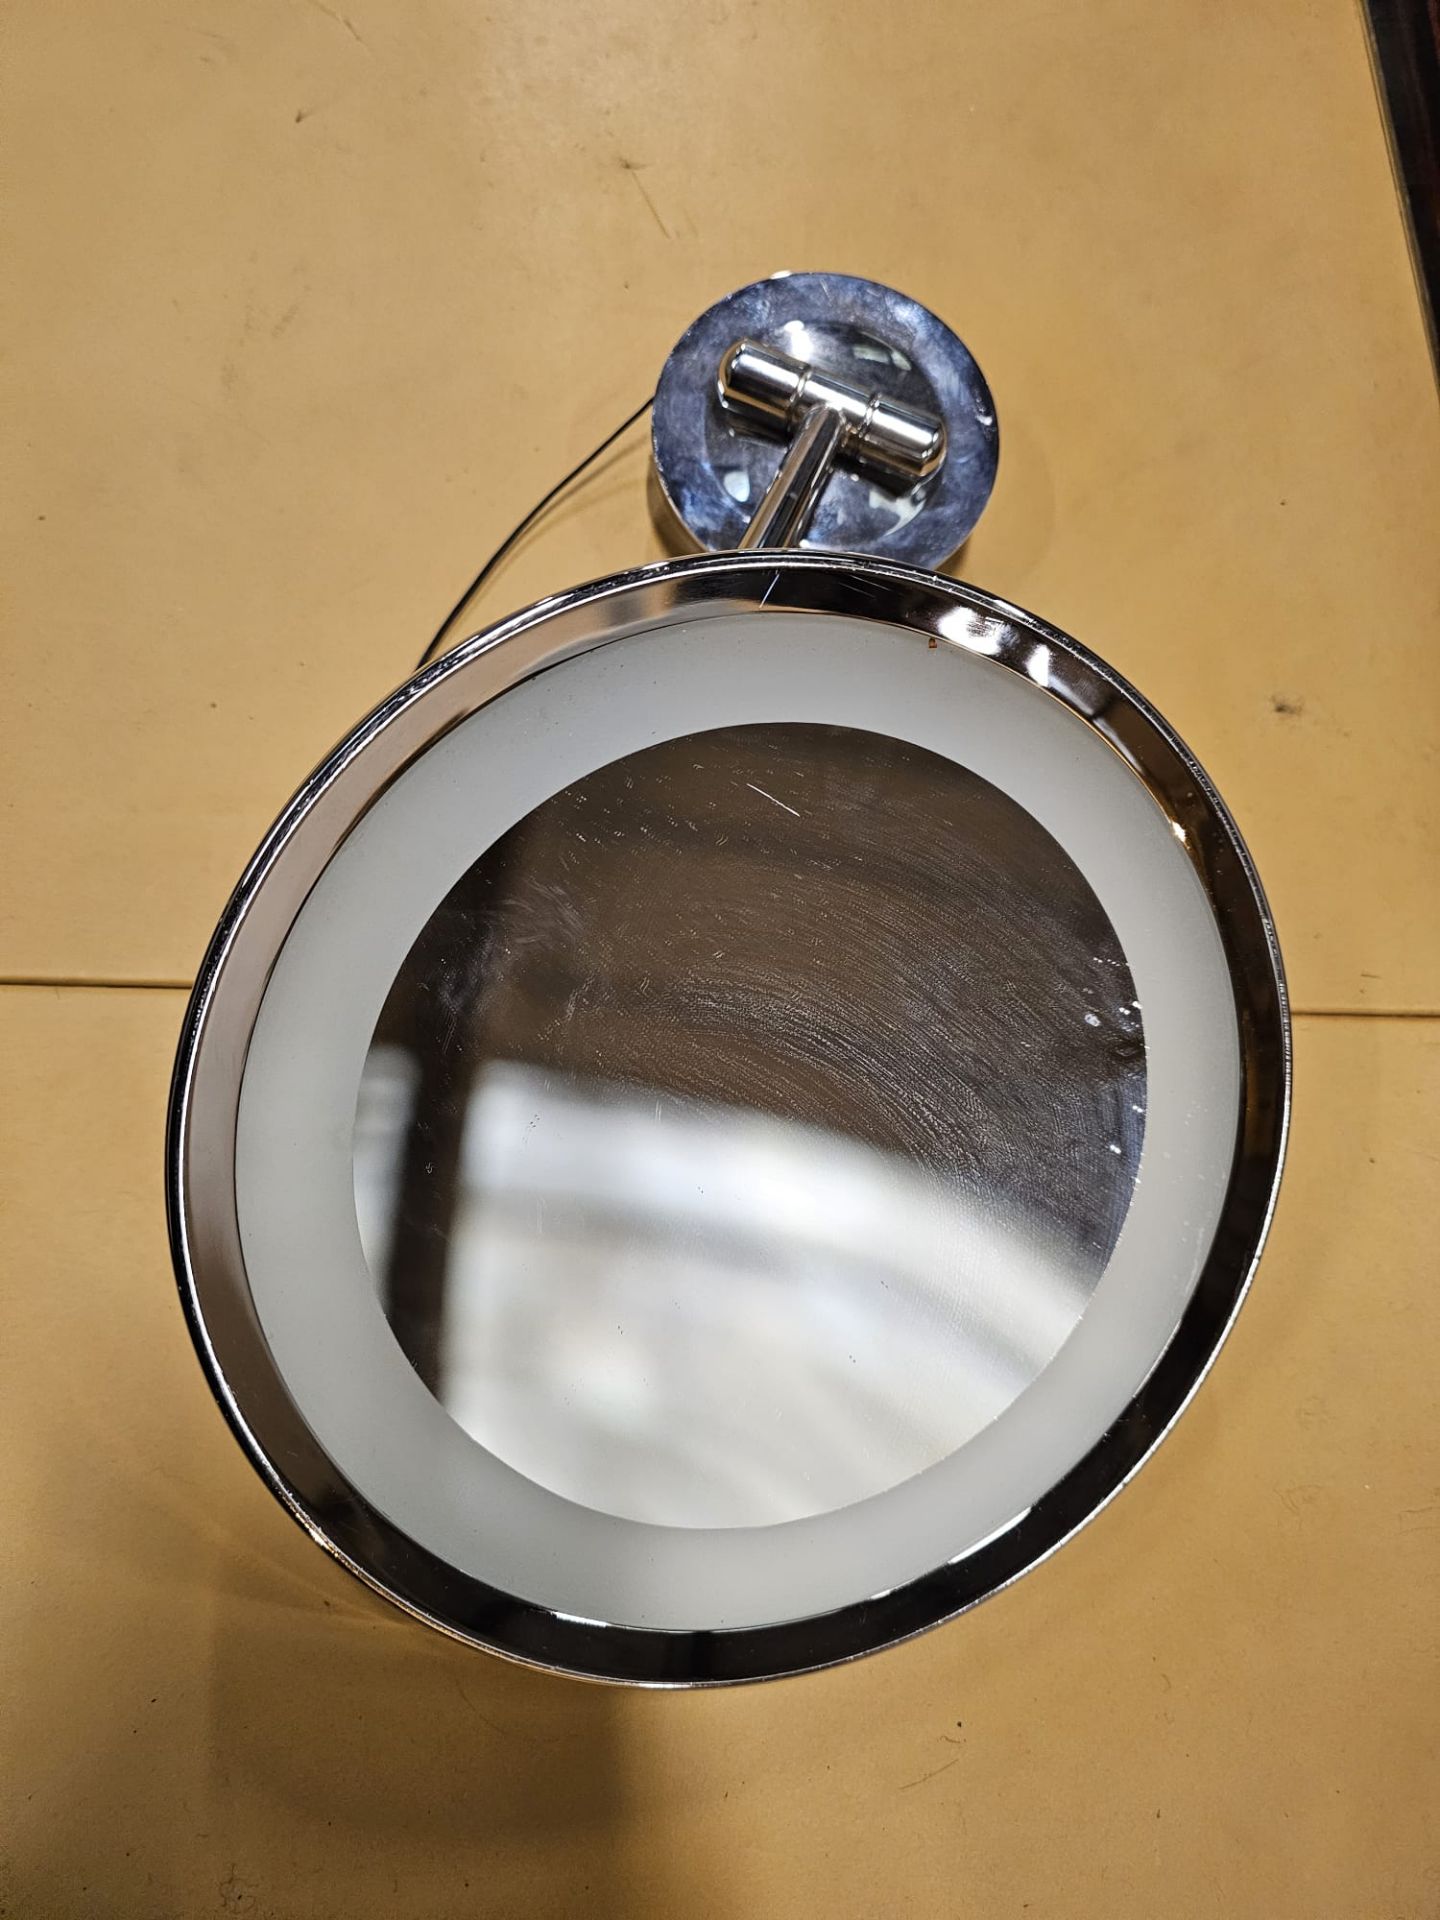 LED Illuminated Magnifying Vanity Mirror For Bathroom Round Ingress Protection Rating IP45 - Image 2 of 3